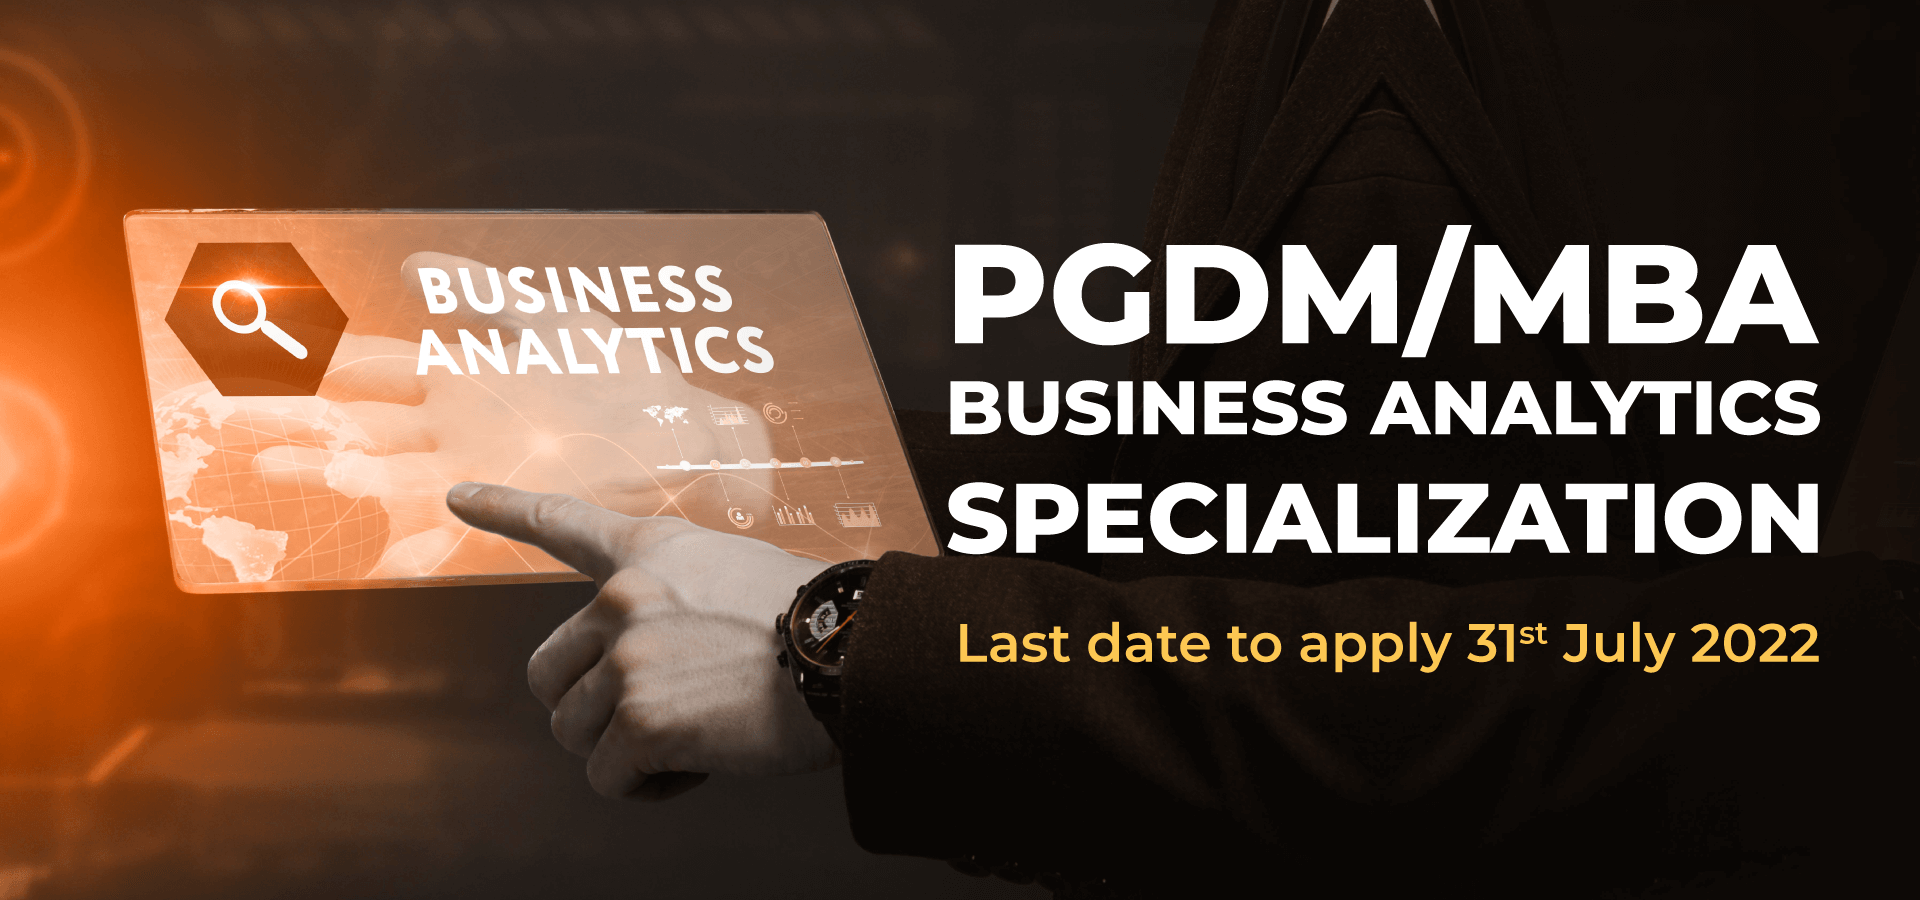 PGDM MBA Business Analytics Specialization